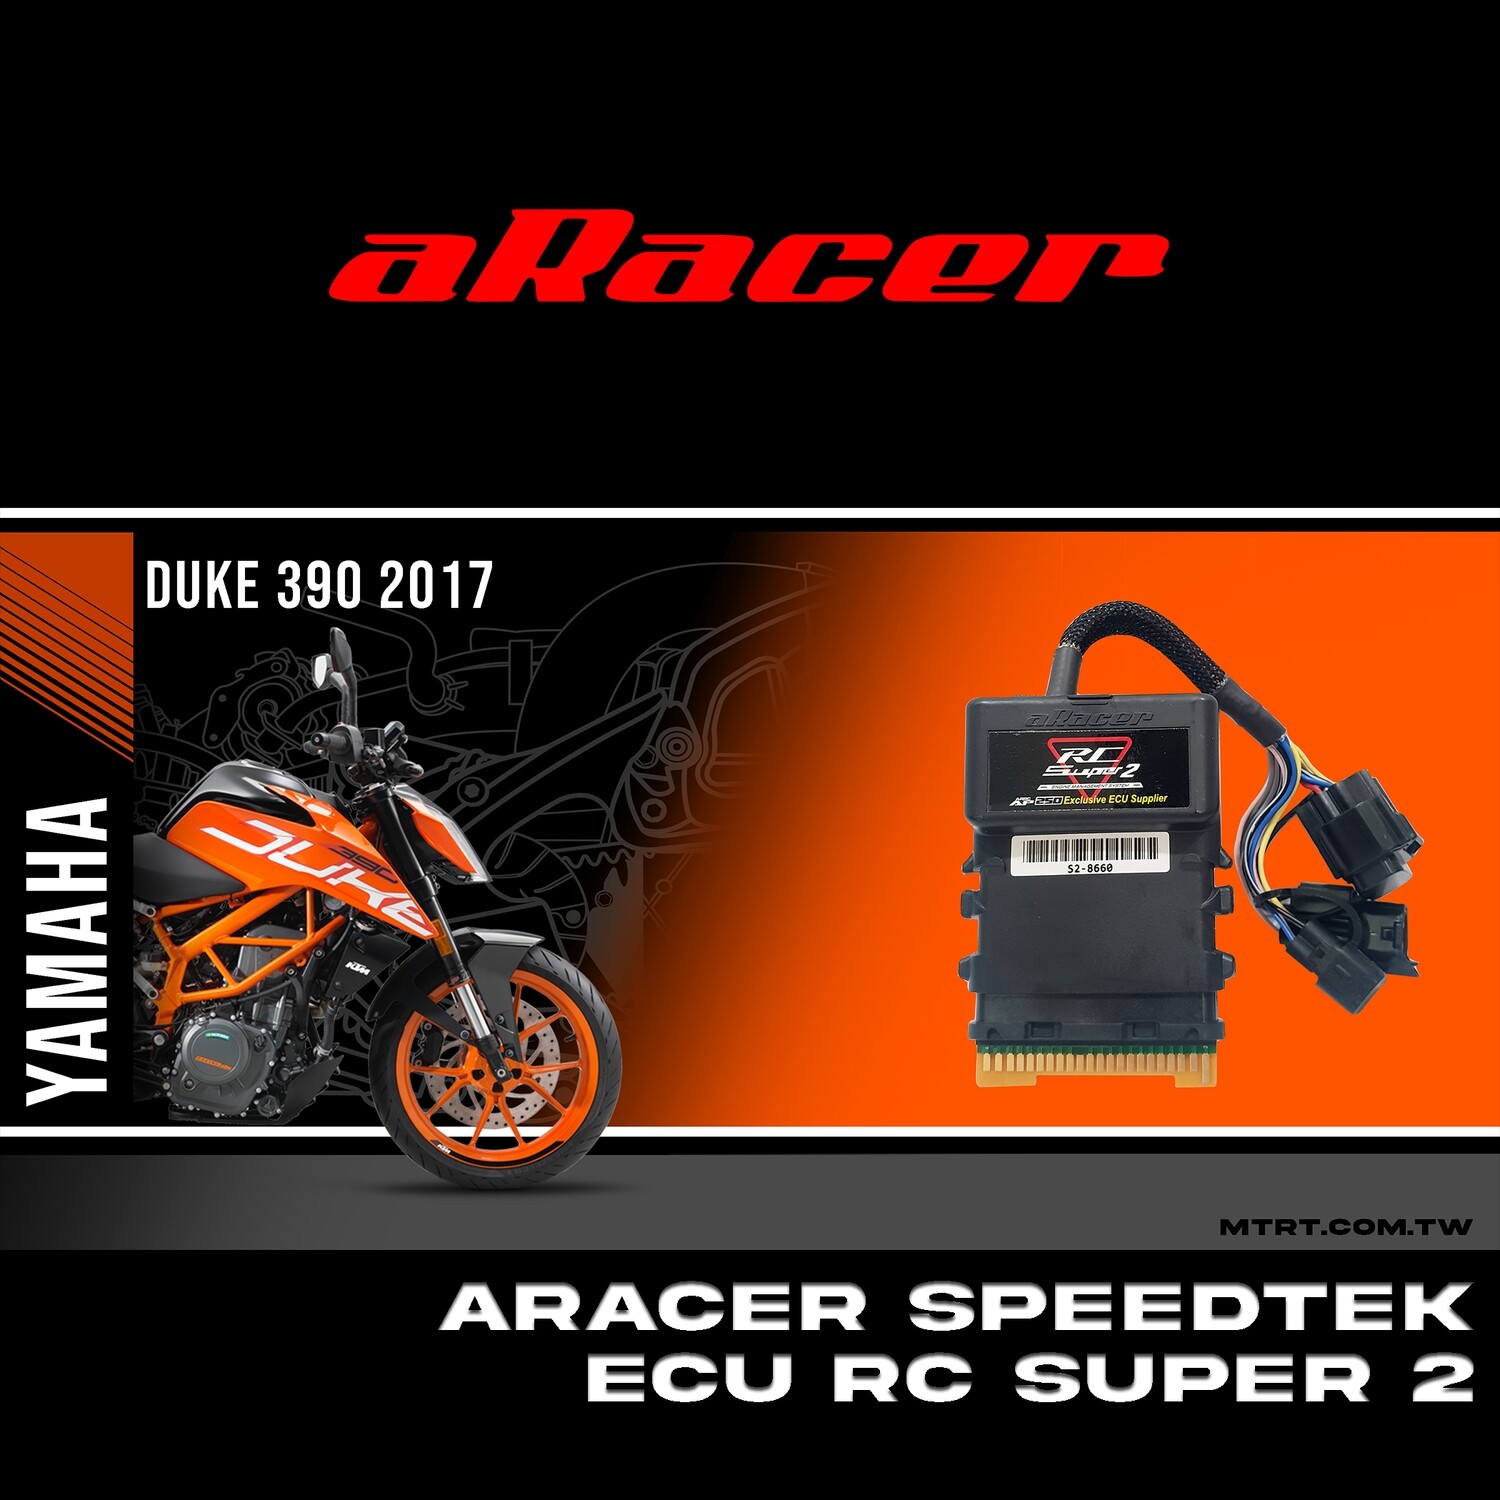 ARACER speedtek ECU RC SUPER2 (DUKE390 2017)